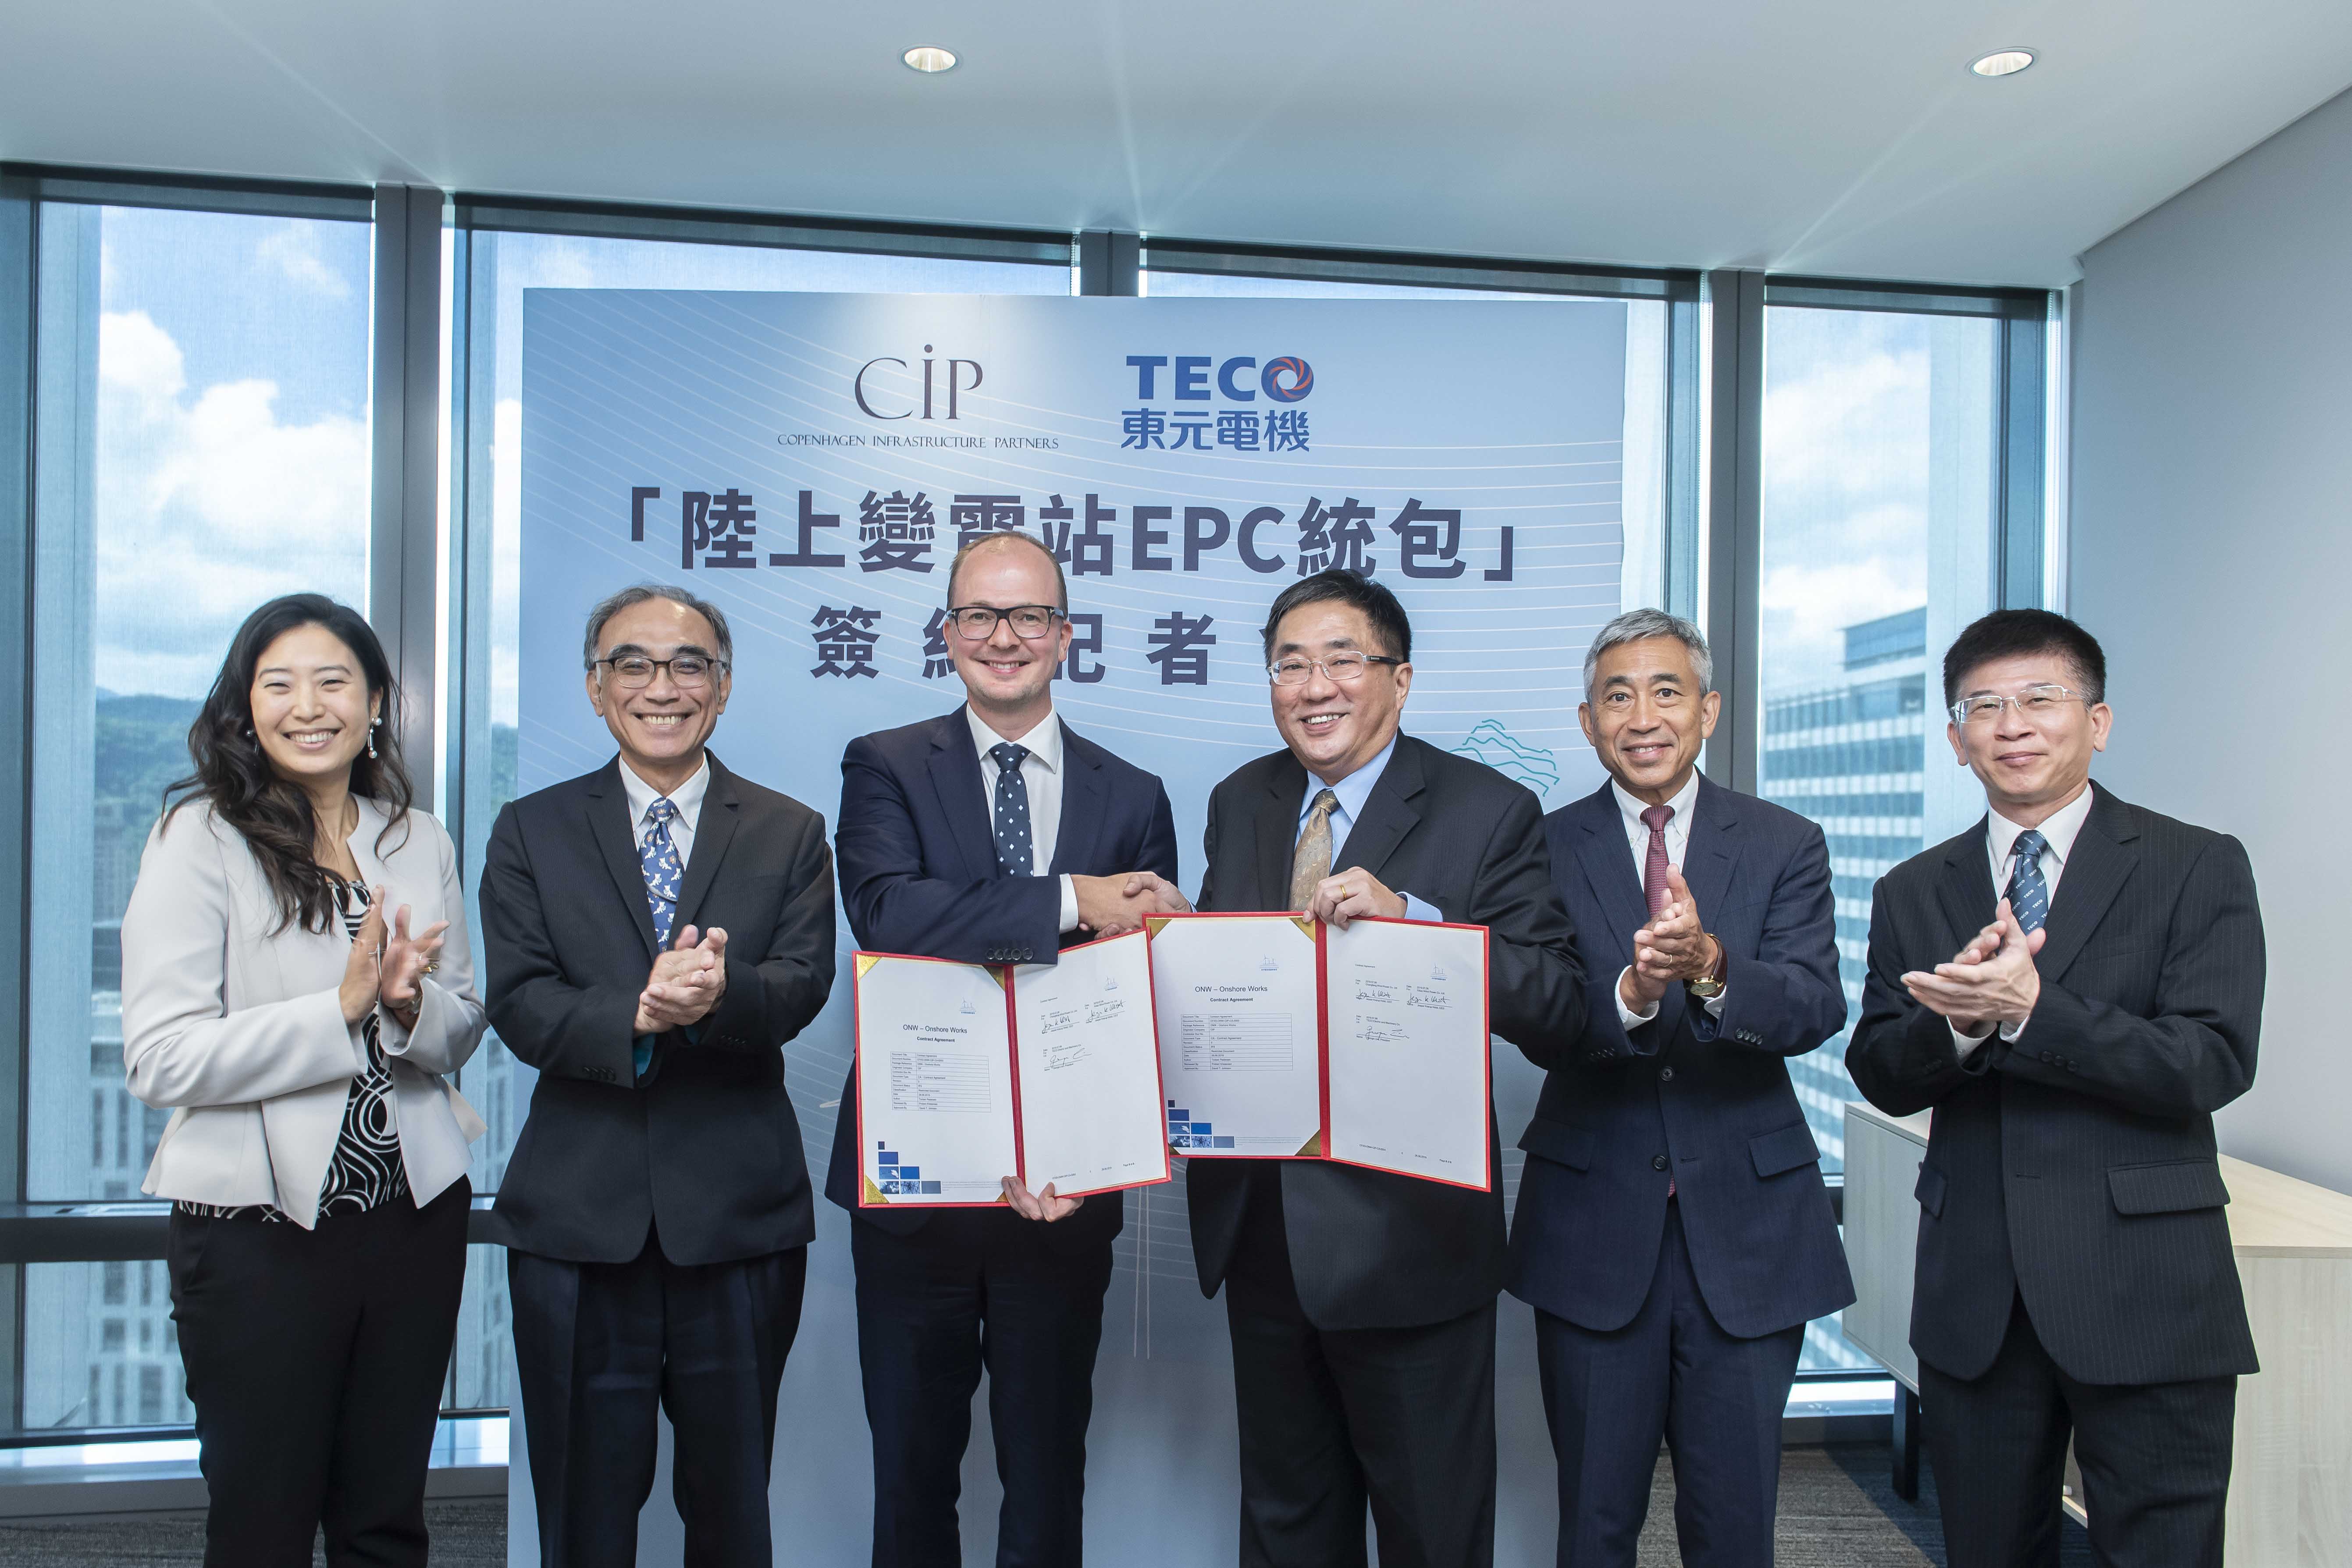 From left, are: Marina Hsu (Chief Development Officer, CIP), BK Yang (Deputy Director of IDB), Messrs Jesper Krarup Holst (CEO, CIP), George Lien (Acting President, TECO), Wayne Chin (GM, PECL)